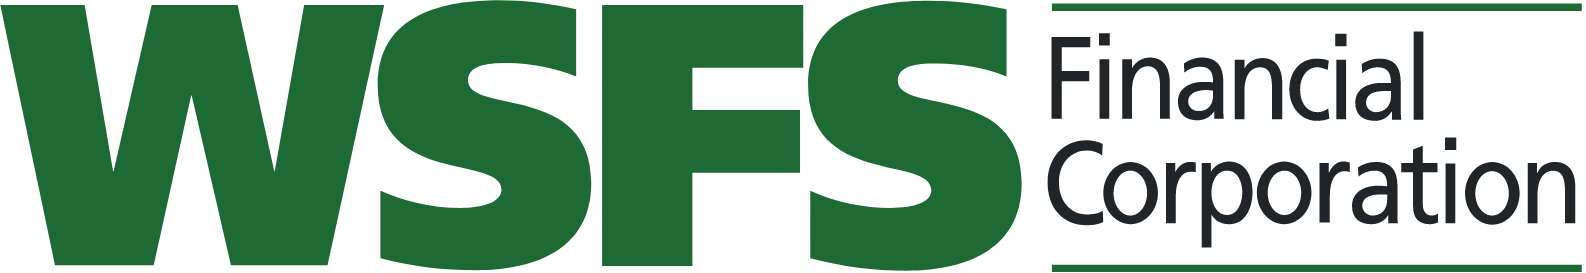 WSFS Financial logo large (transparent PNG)